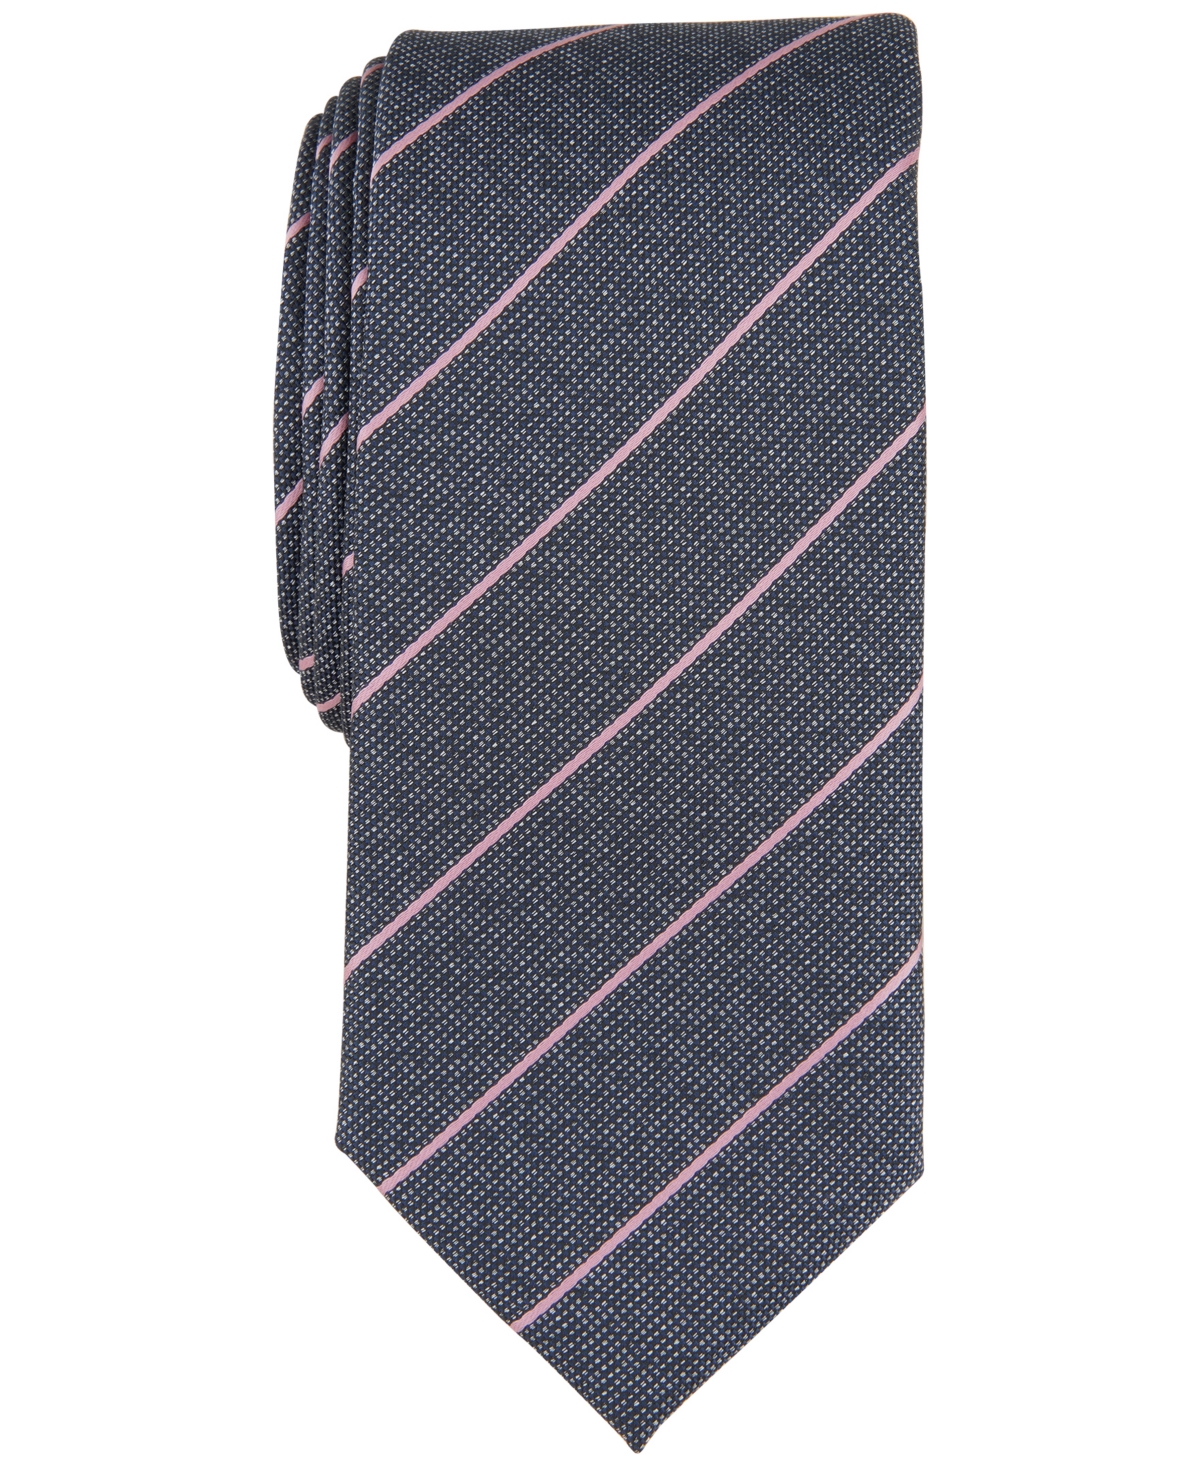 Men's Knighton Stripe Tie, Created for Macy's - Pink